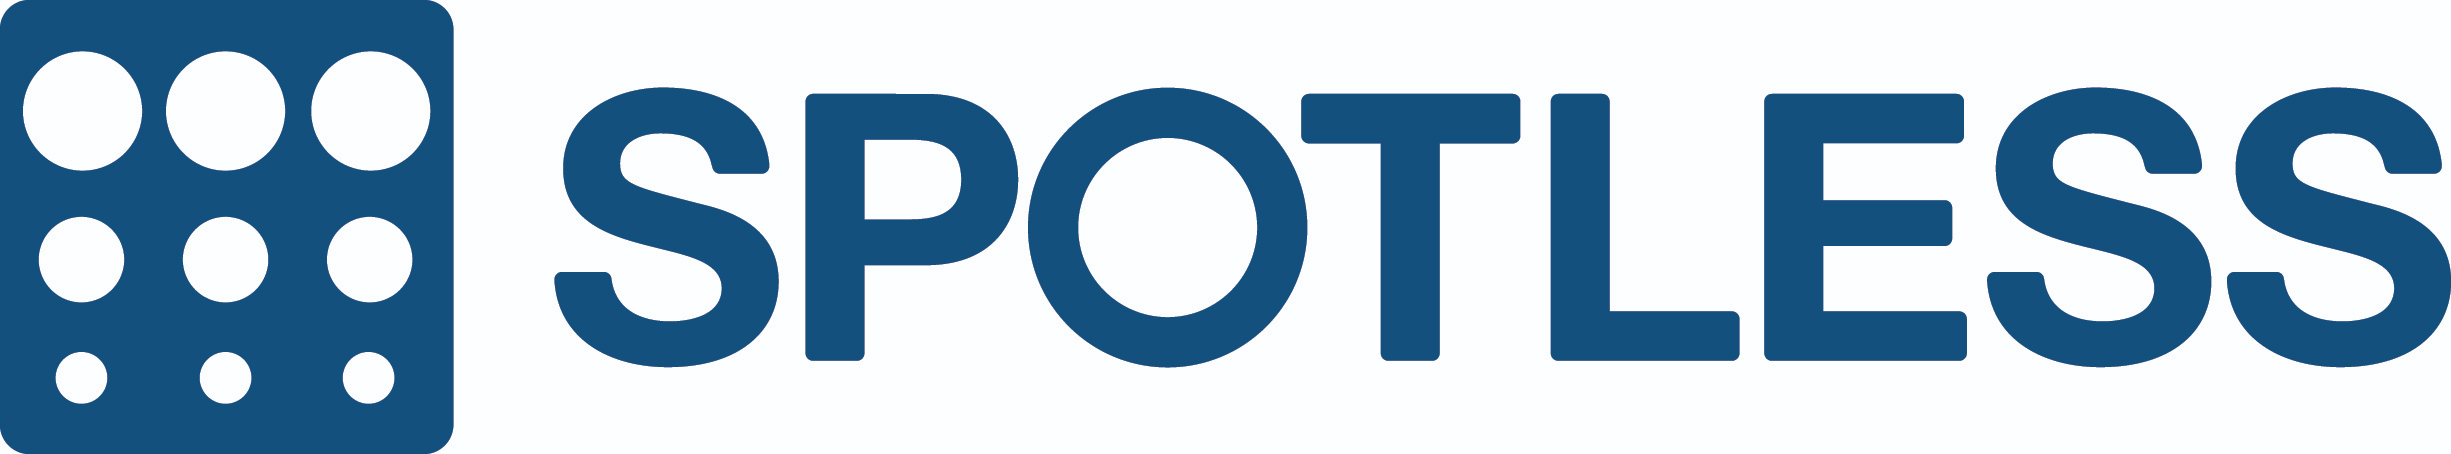 Spotless Brand Logo